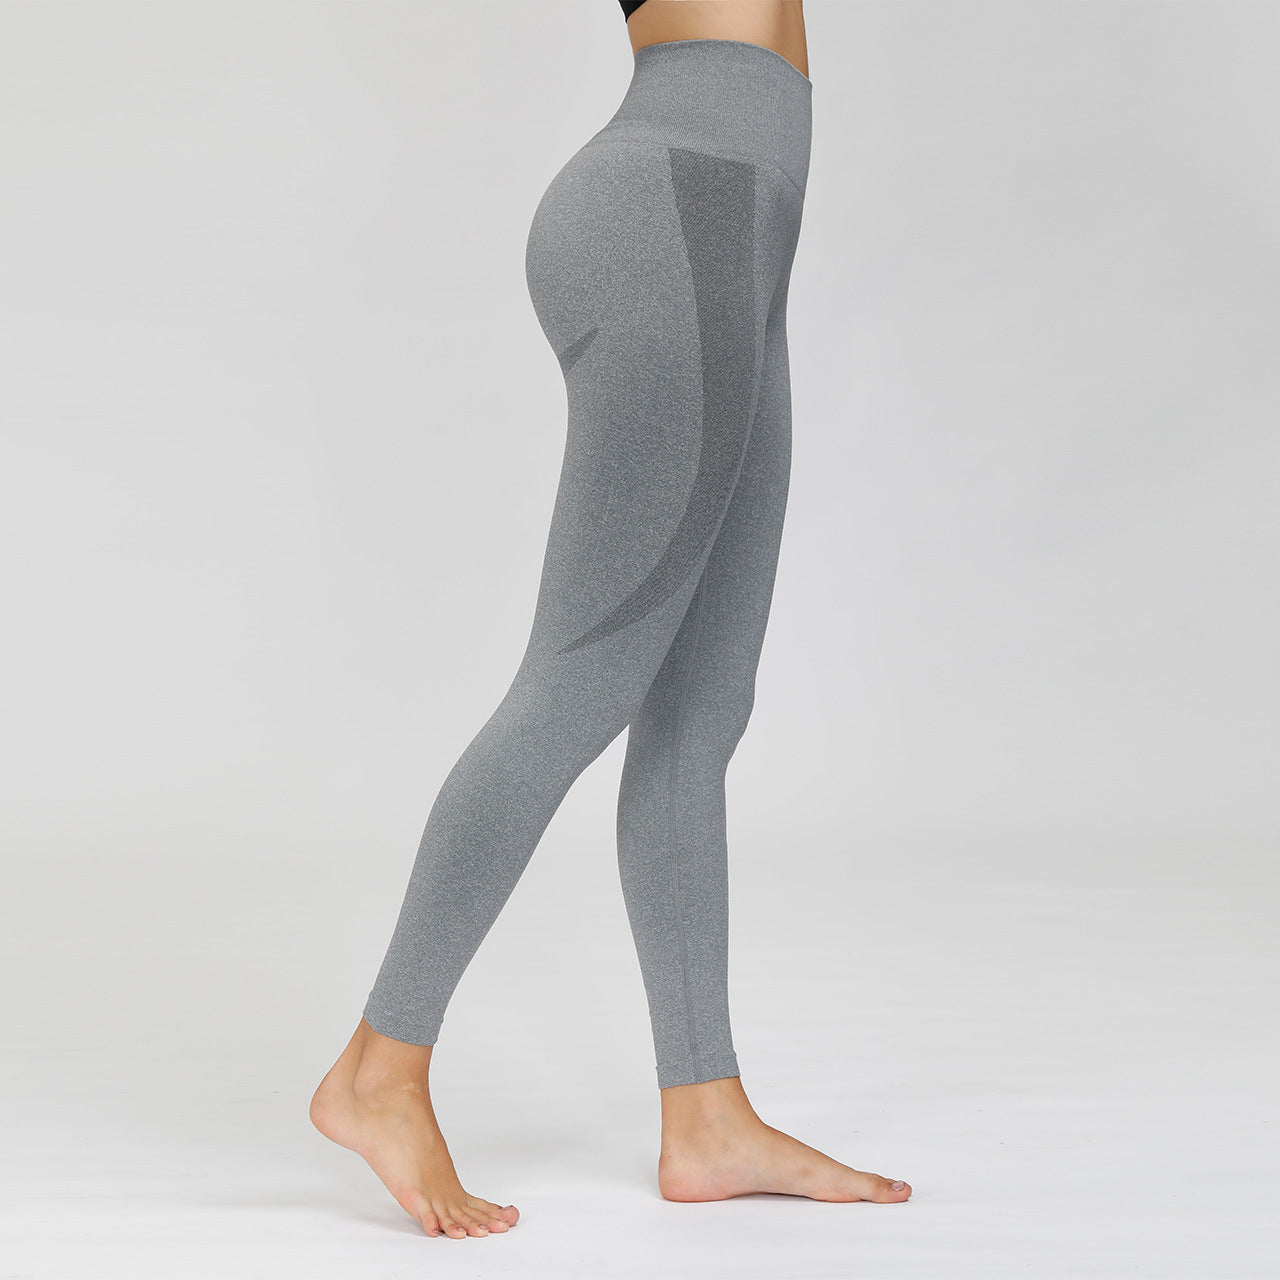 2020 Best Snowflake Smiley Face Pants Jacquard Seamless Yoga Pants Fitness Capris Yoga